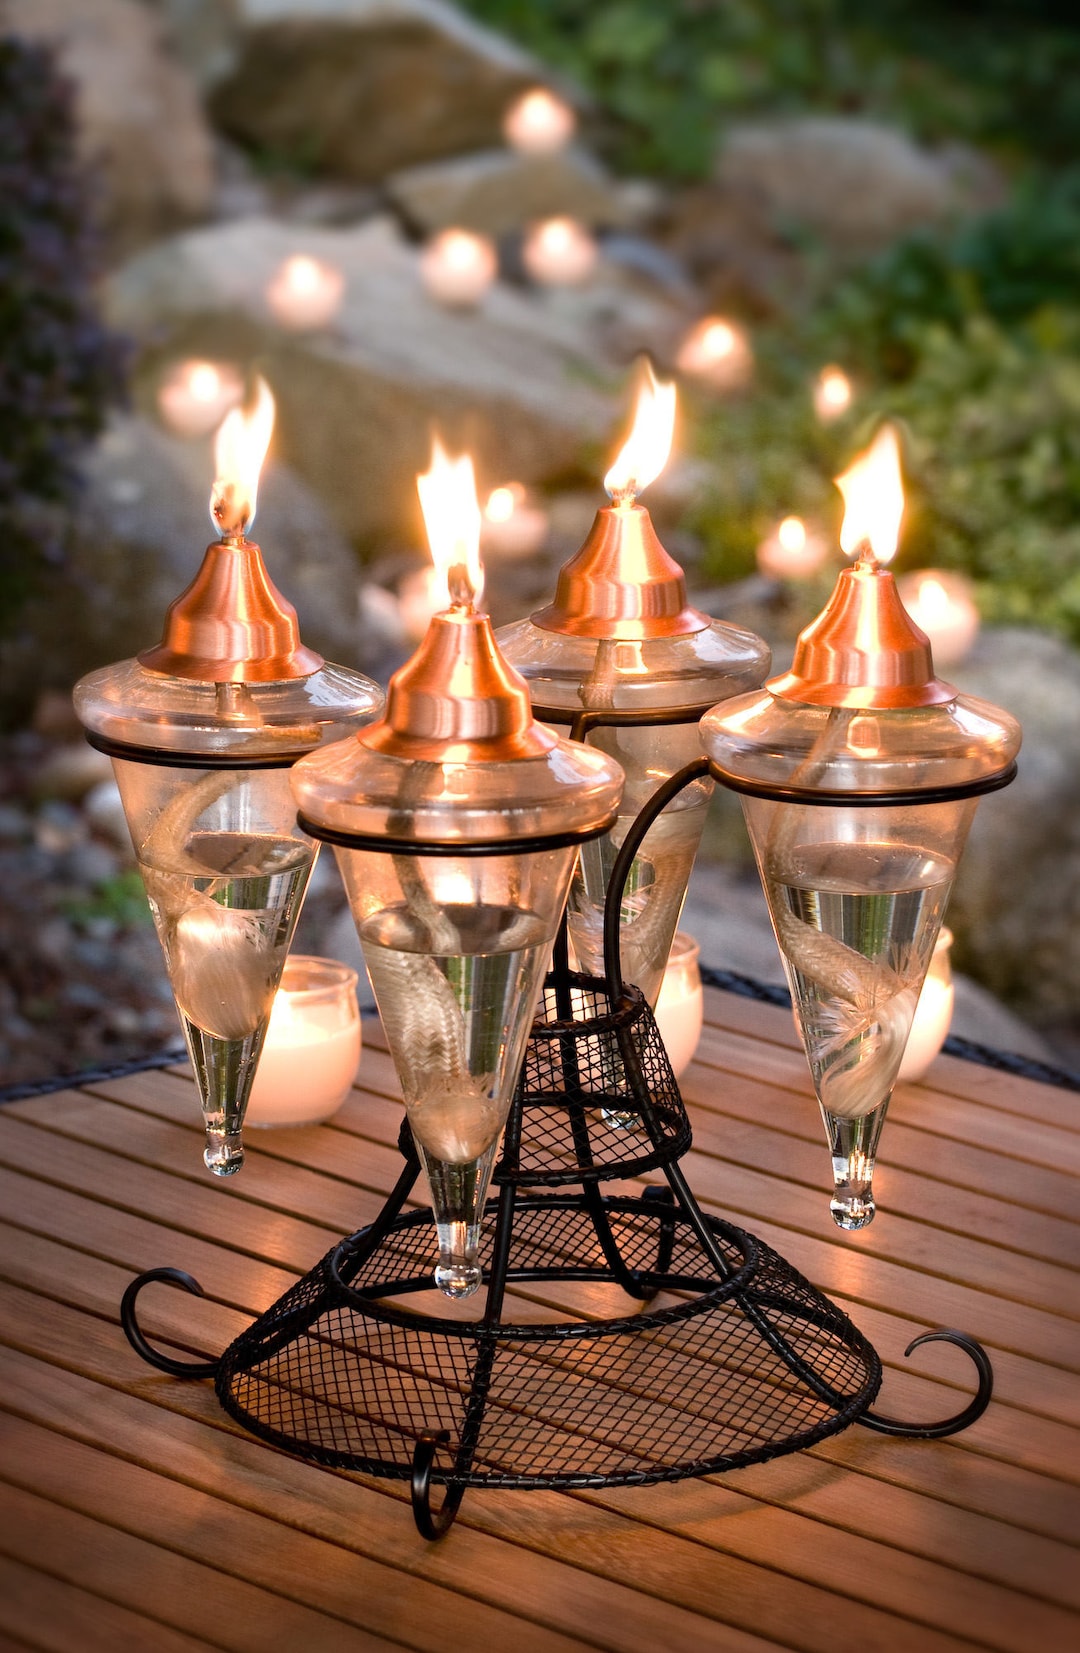 H Potter Tabletop Glass Torch Outdoor Lighting Patio Lighting, Deck,  Balcony, Backyard Decor Copper Snuffer Holiday Garden Wedding Gift Idea 